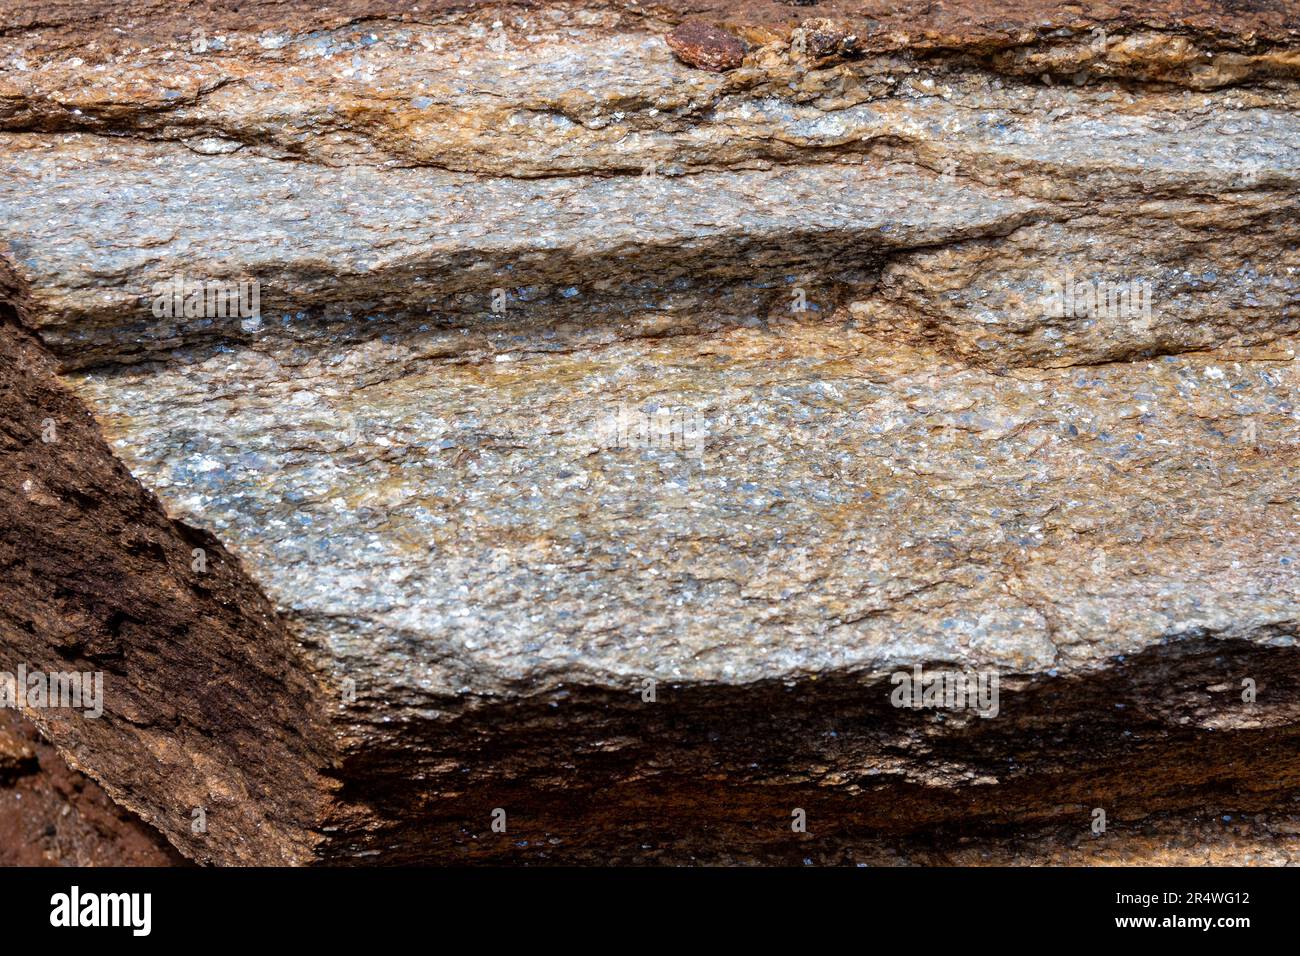 Rock outcrop of Precambrian mica schist, a metamorphic rock. Kenya ...